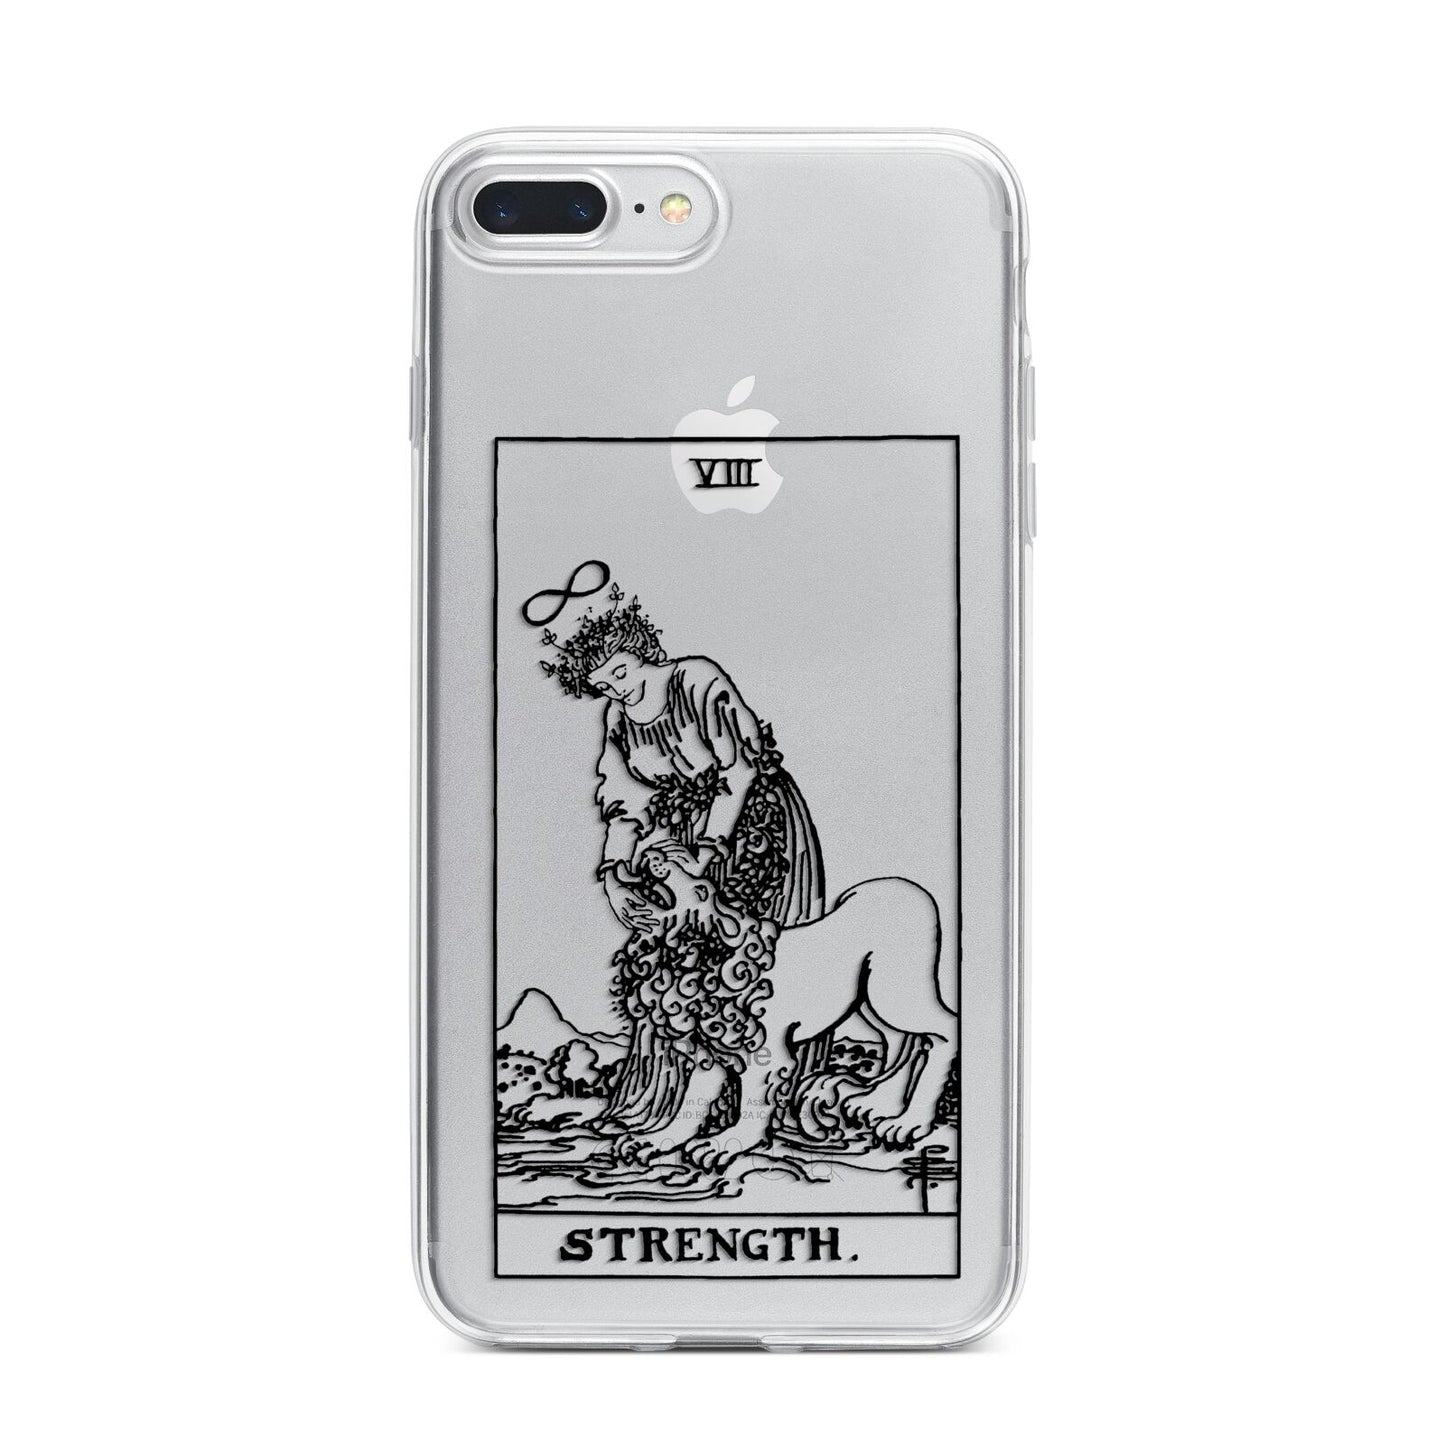 Strength Monochrome Tarot Card iPhone 7 Plus Bumper Case on Silver iPhone